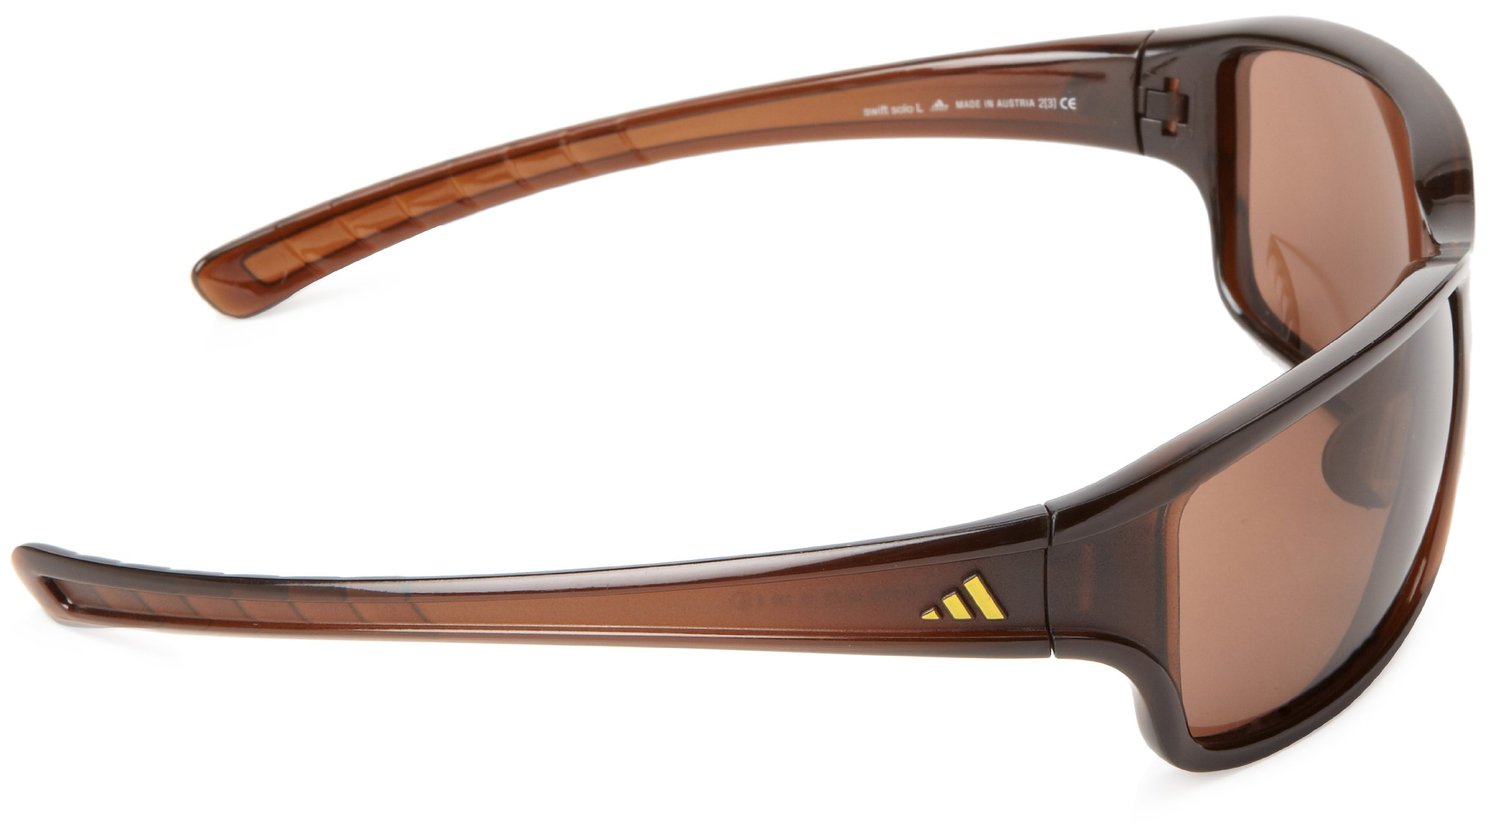 Adidas-Swift-Solo-La4086053-Rectangle-Sunglasses-Brown-66mm.jpg